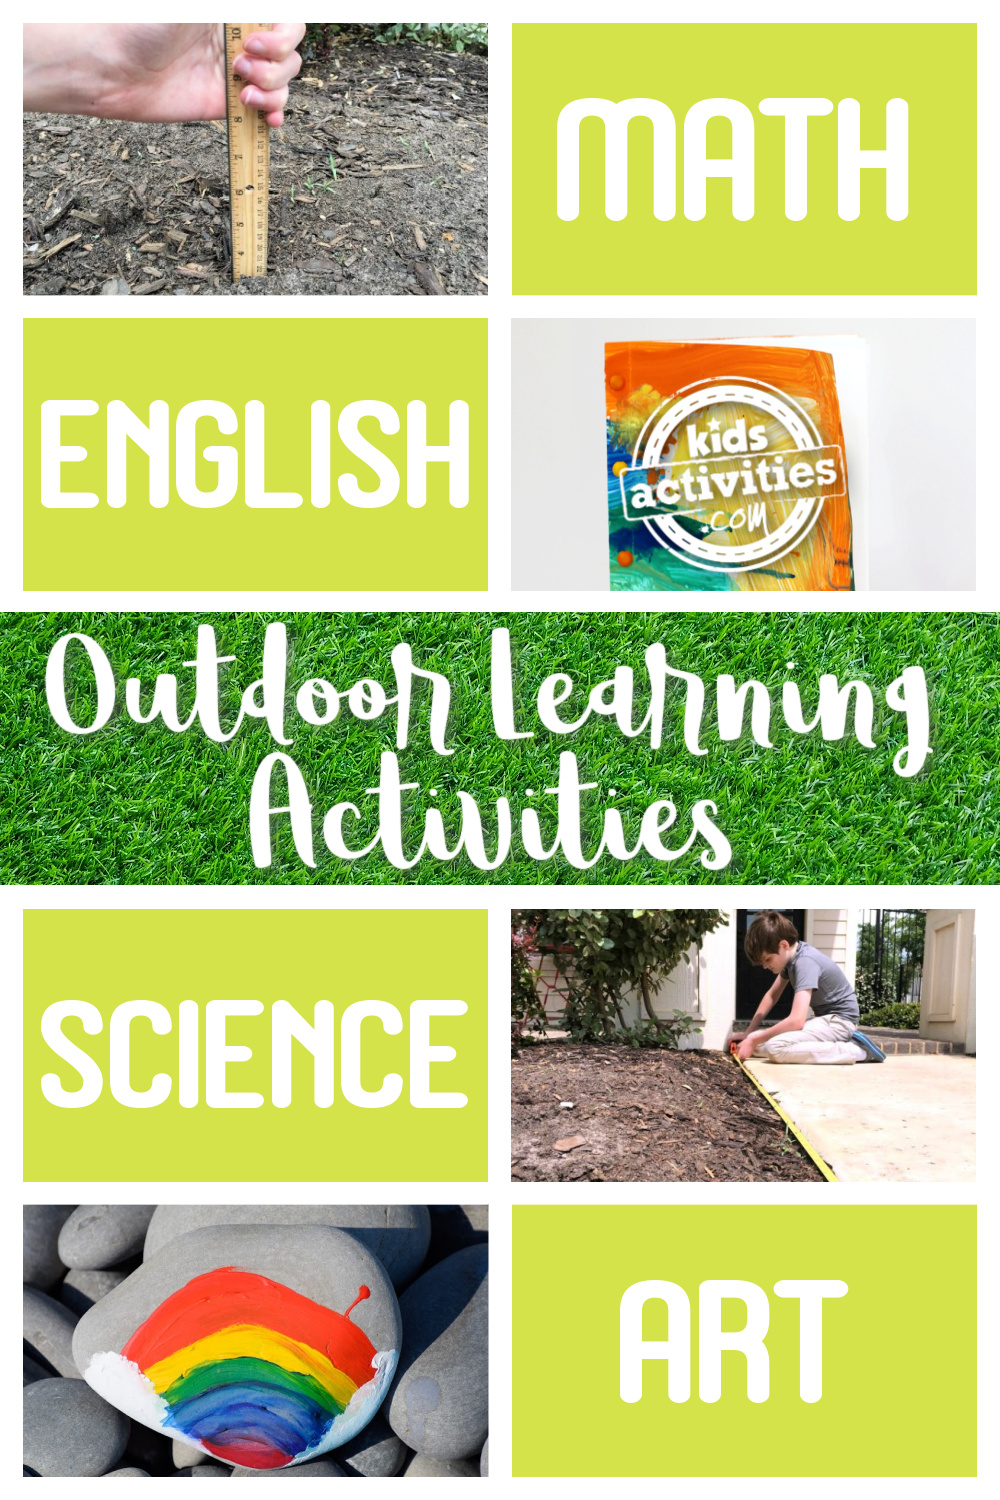 Outdoor Learning Activities for Spring - Kids Activities Blog Pinterest 2